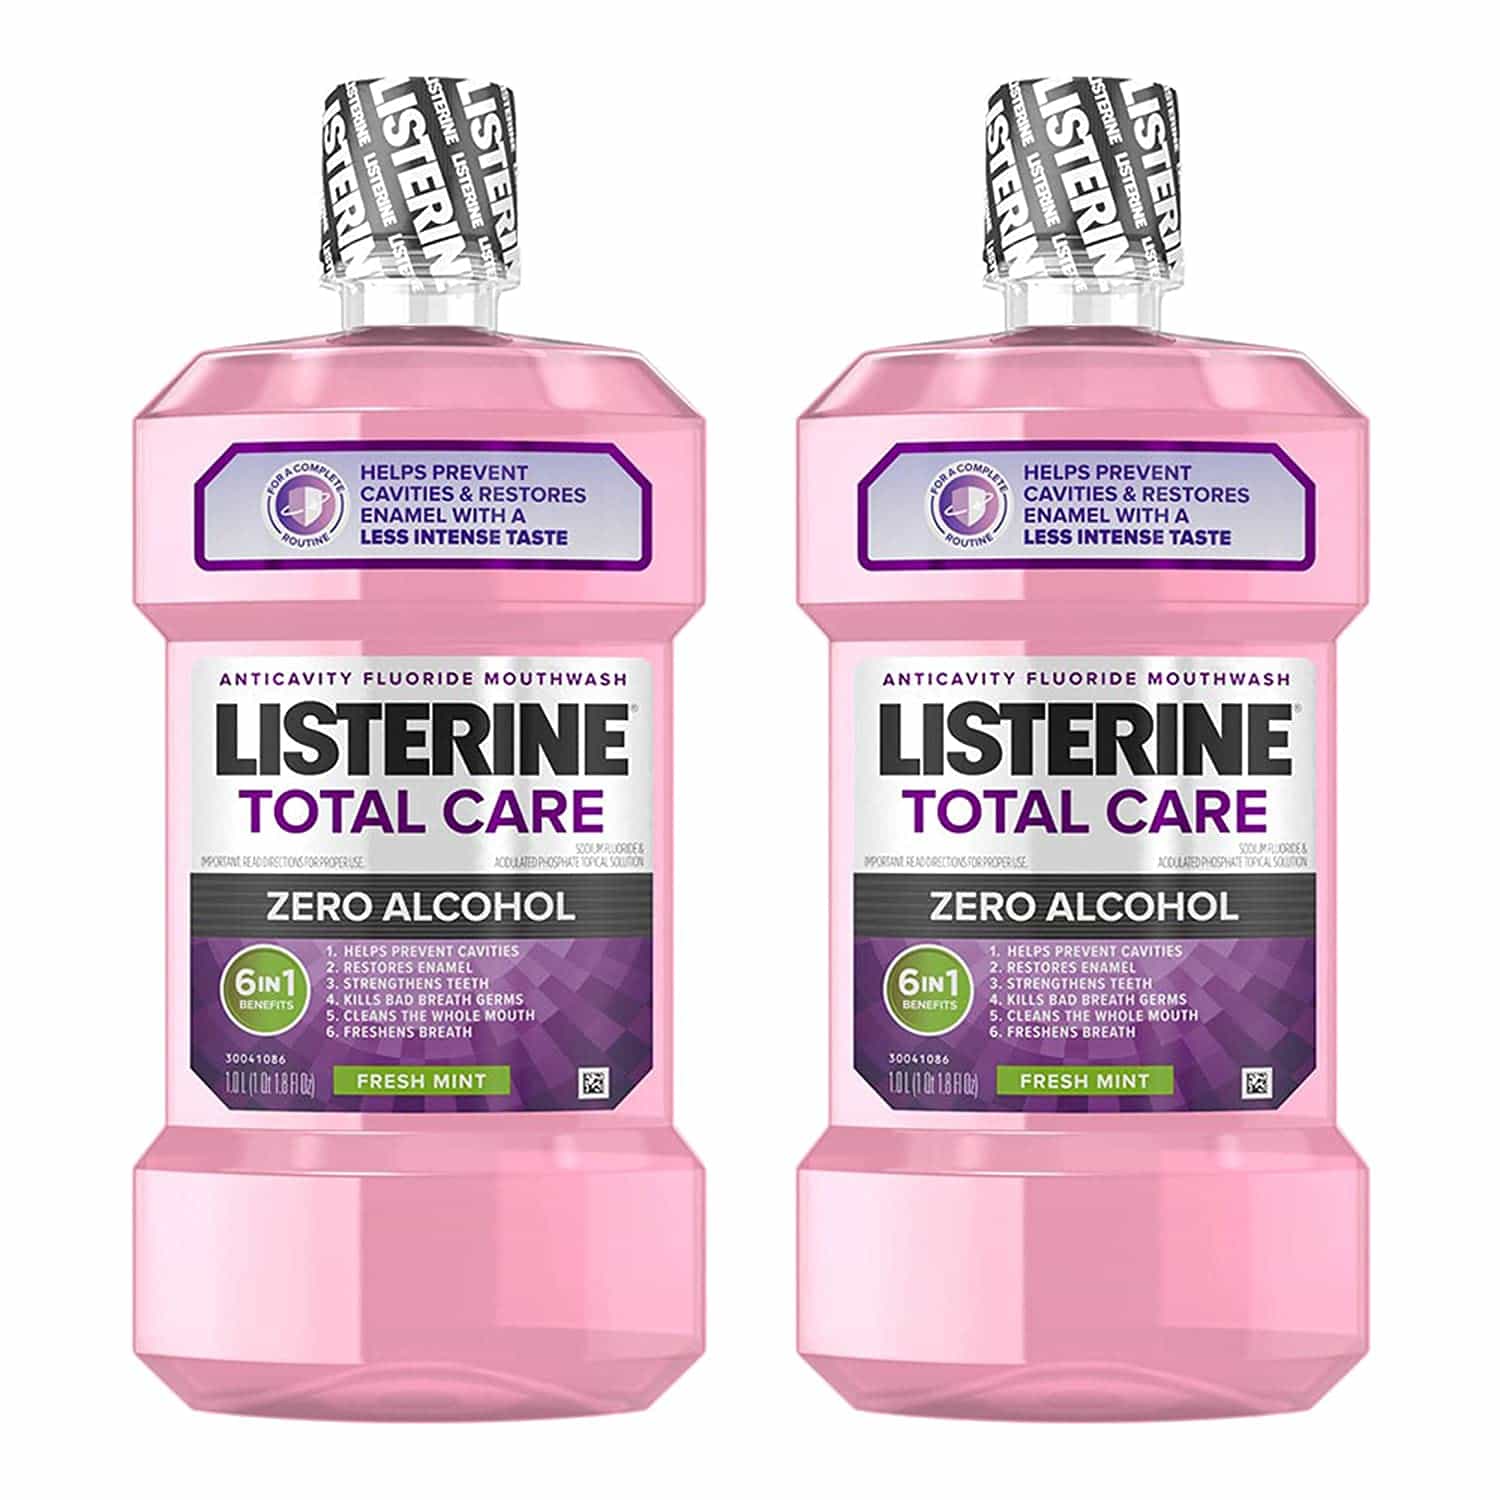 Listerine zero alcohol mouthwash